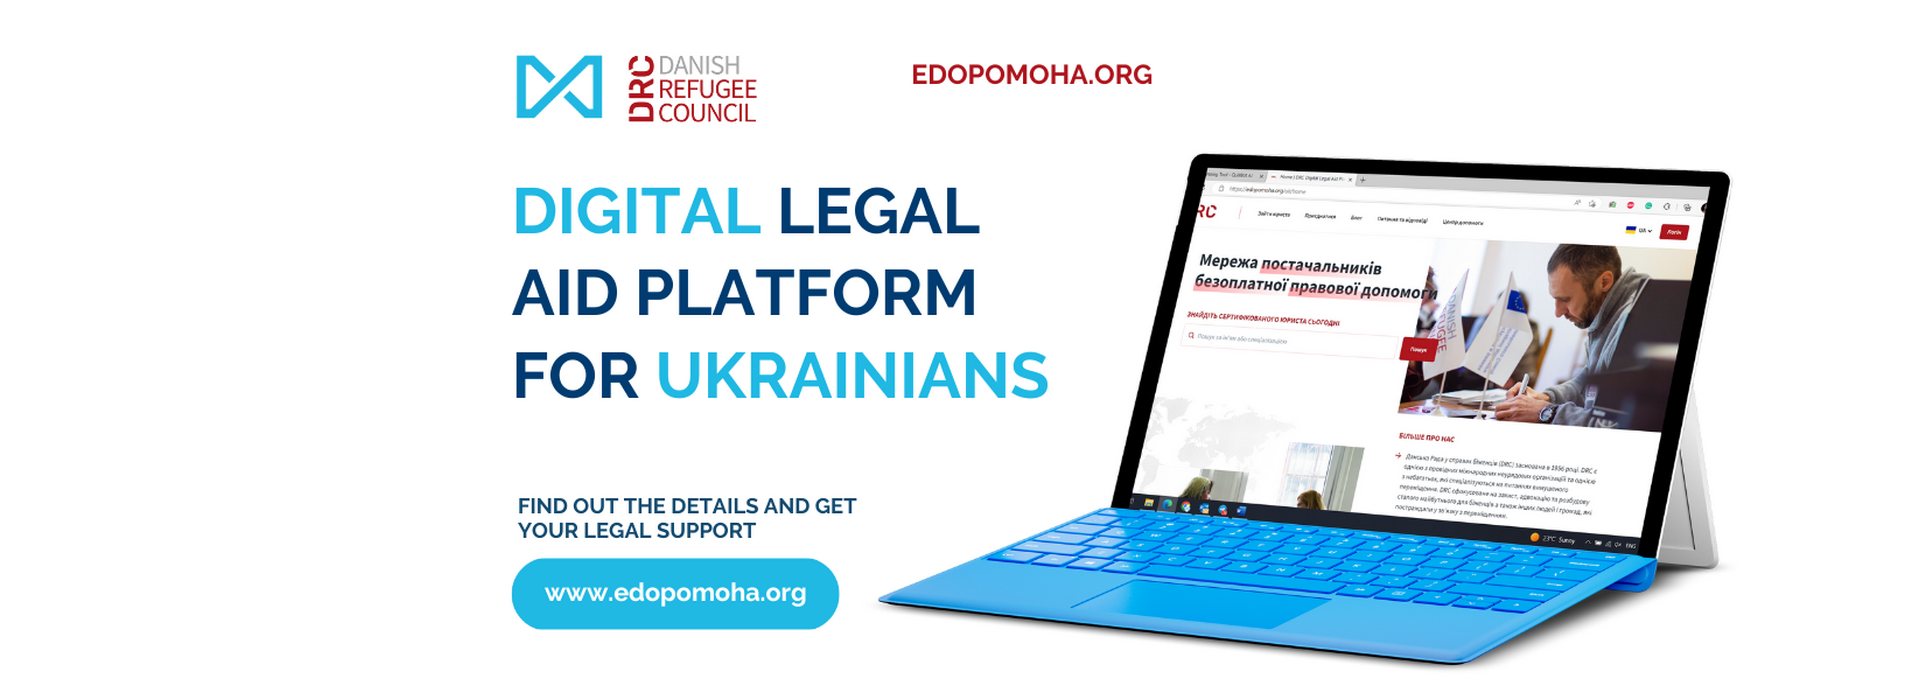 Launch of a Digital Legal Aid Platform